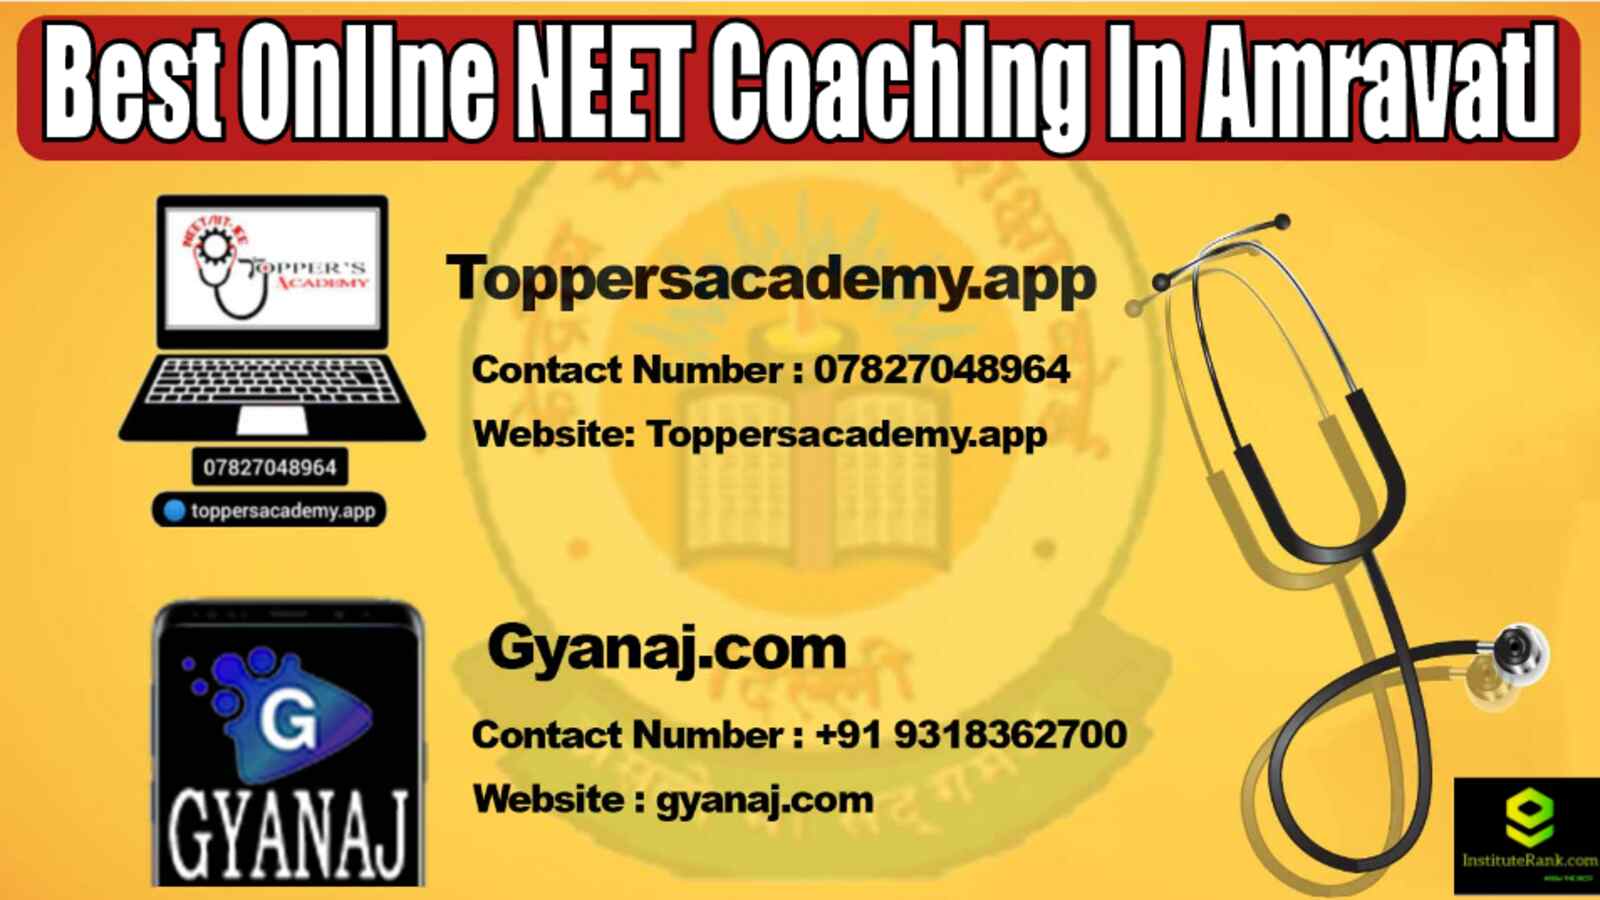 Best Online NEET Coaching in Amravati 2022